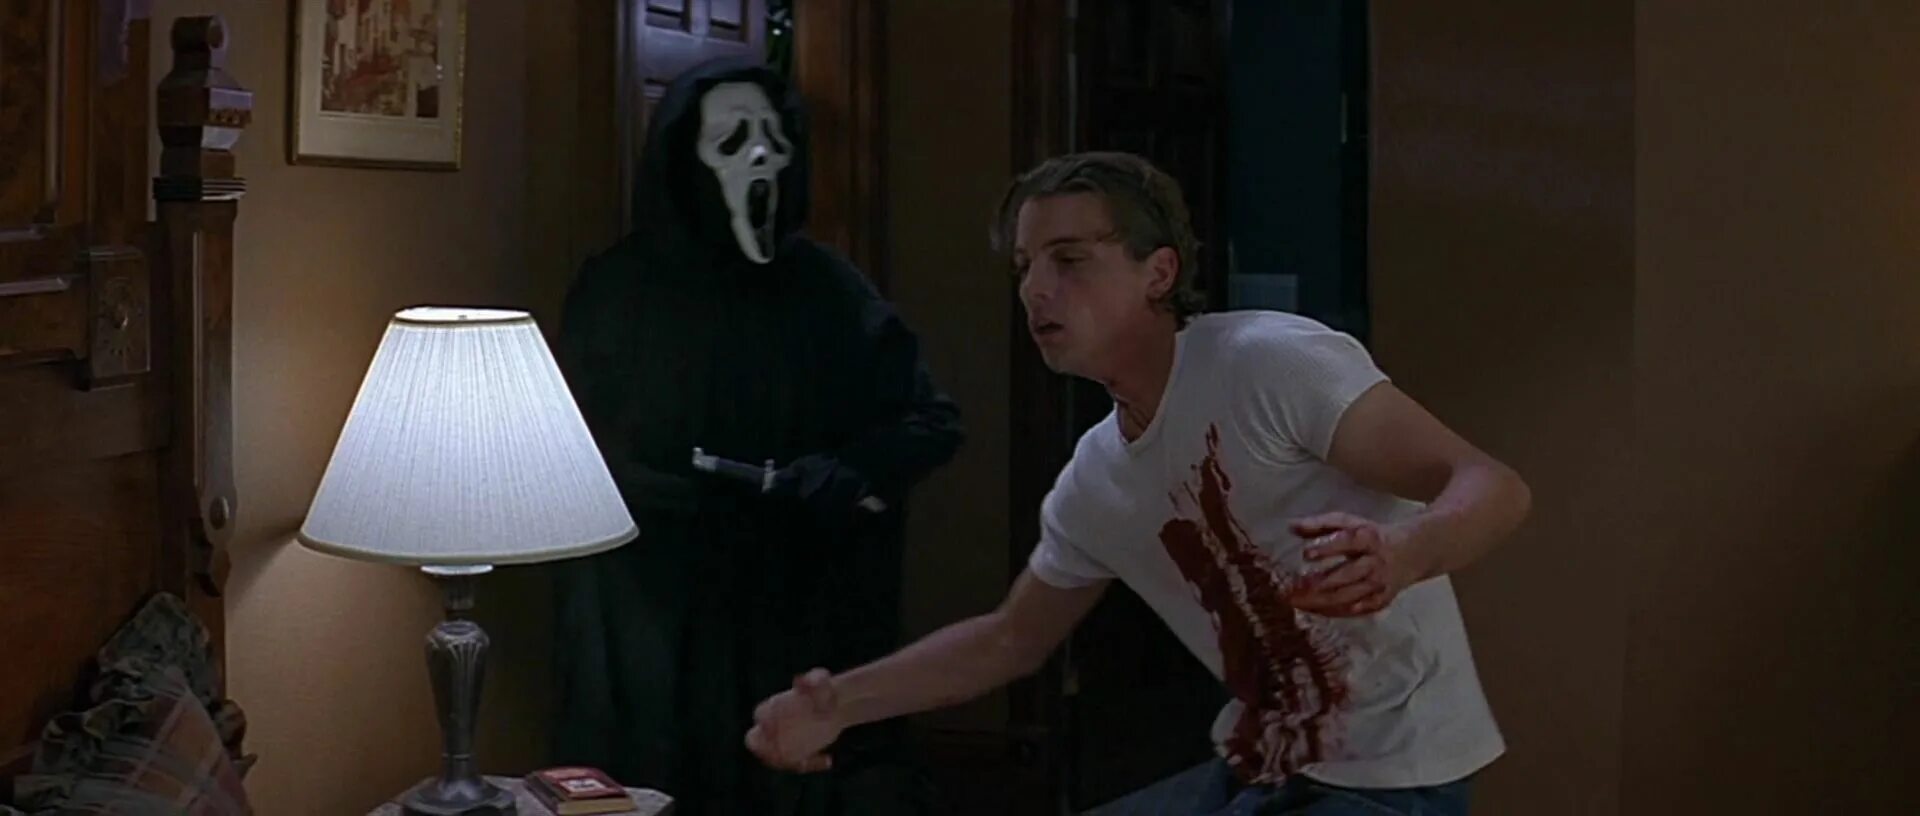 «Крик» (Scream 1996, Режиссер Уэс Крэйвен). Нападения крика